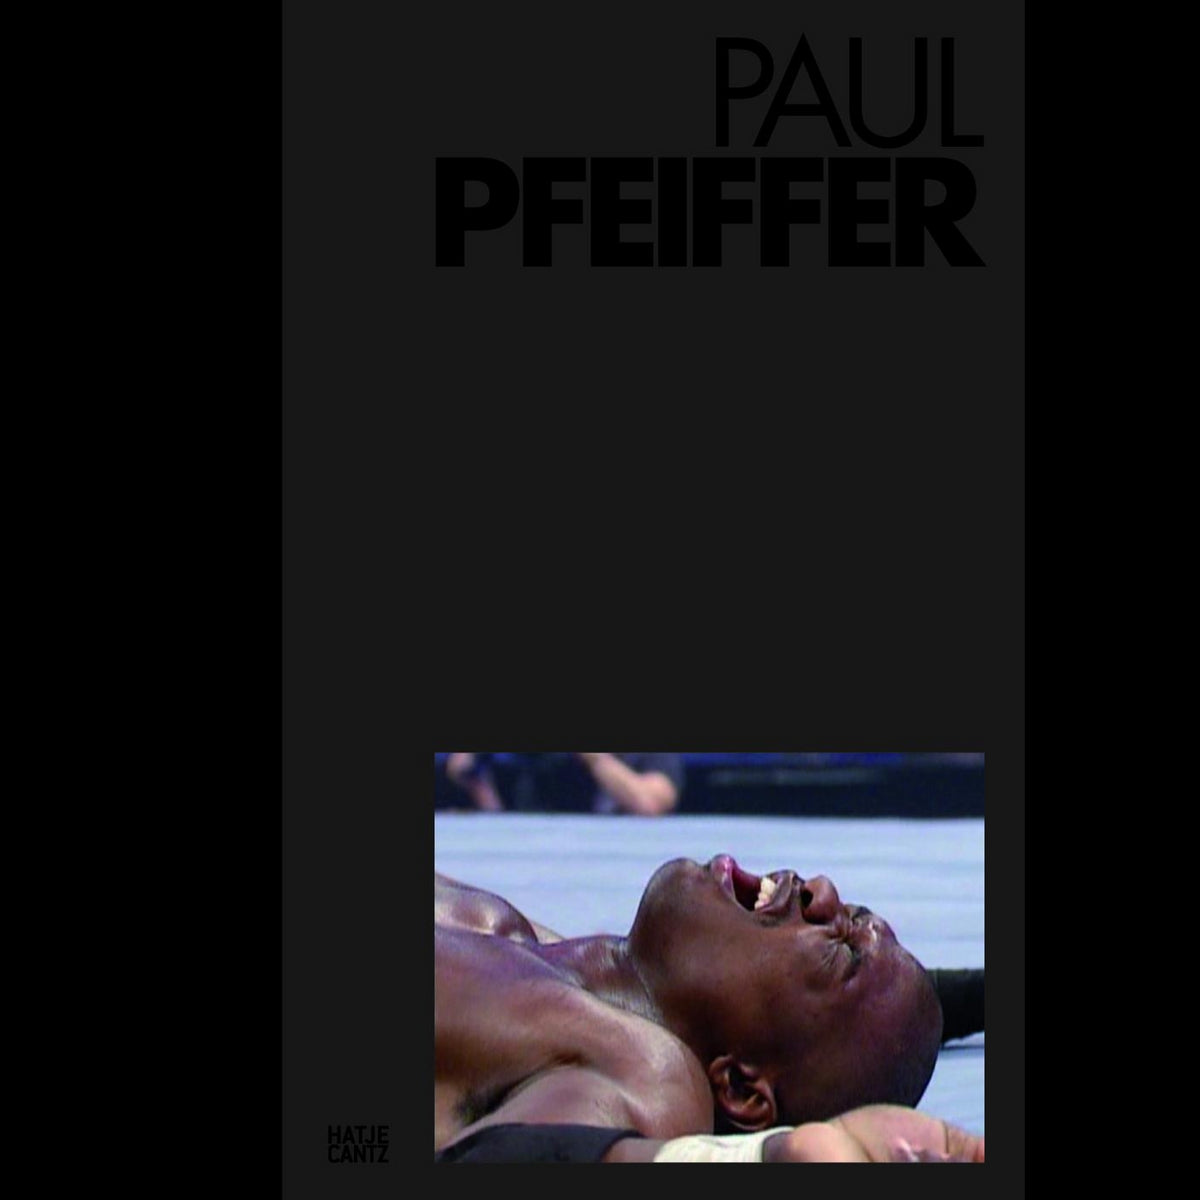 Coverbild Paul Pfeiffer